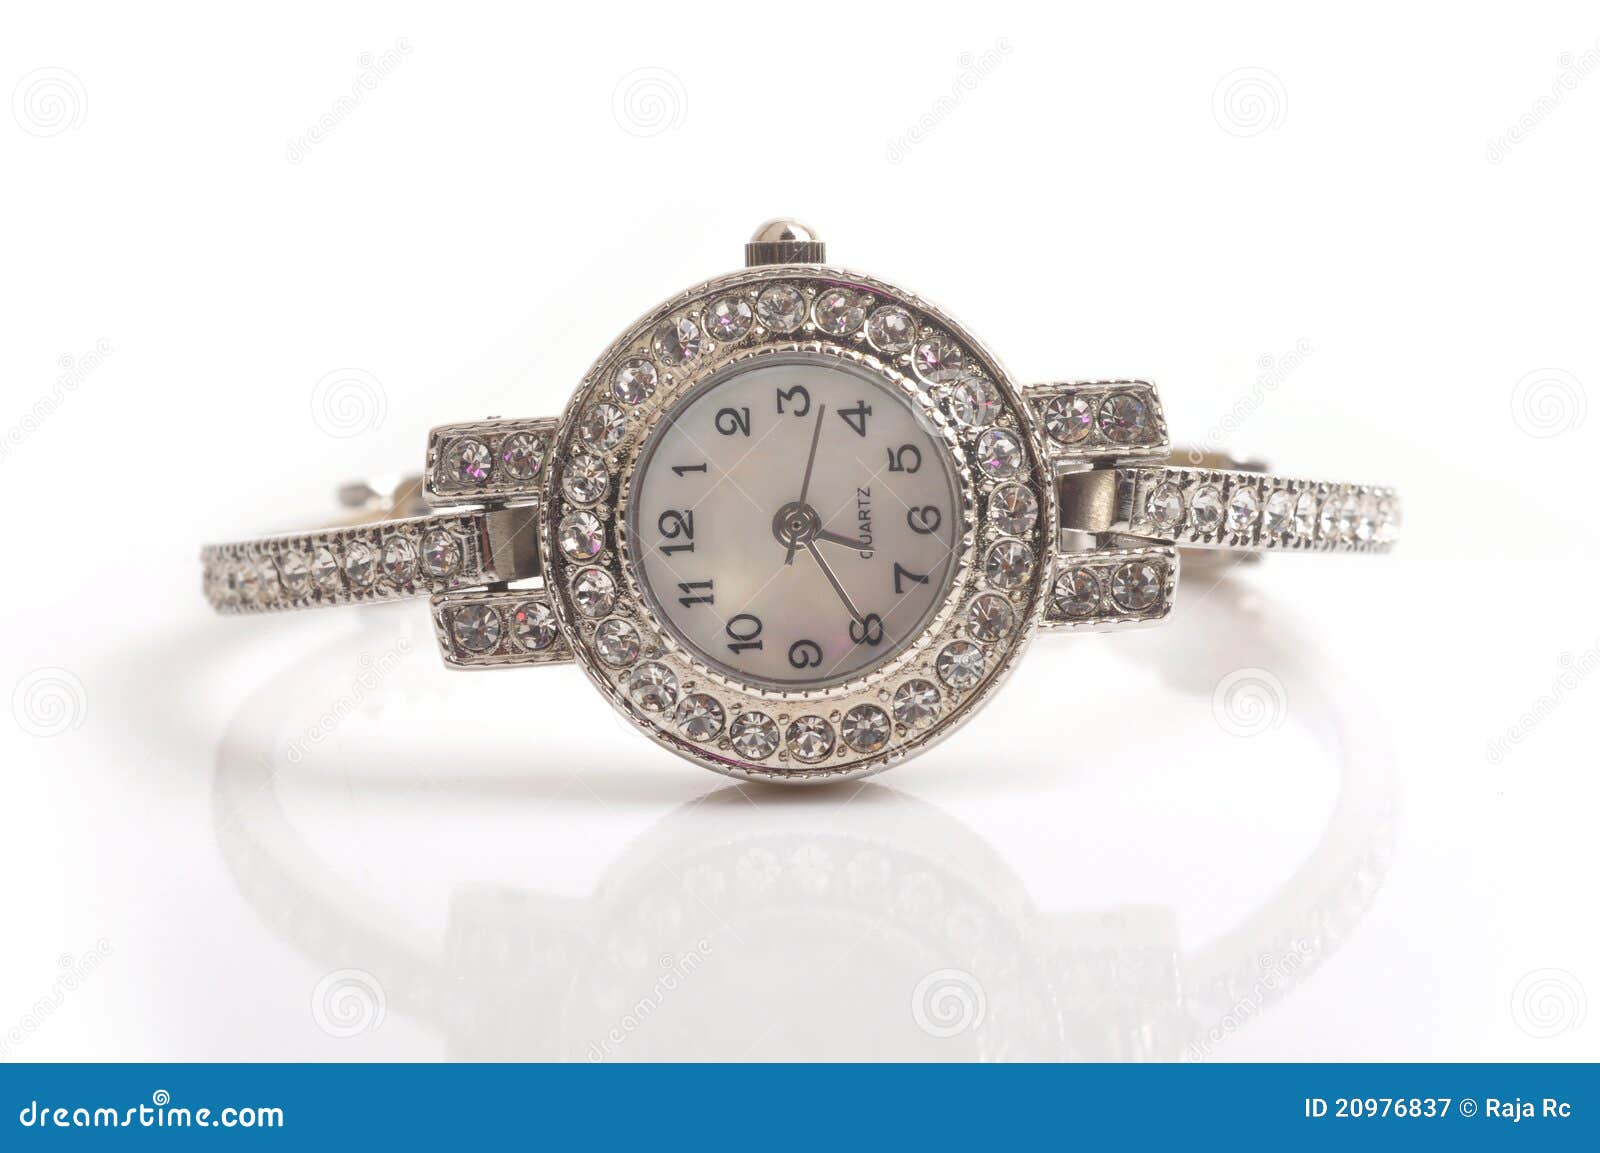 Wrist watch stock image. Image of wrist, chronometer - 20976837